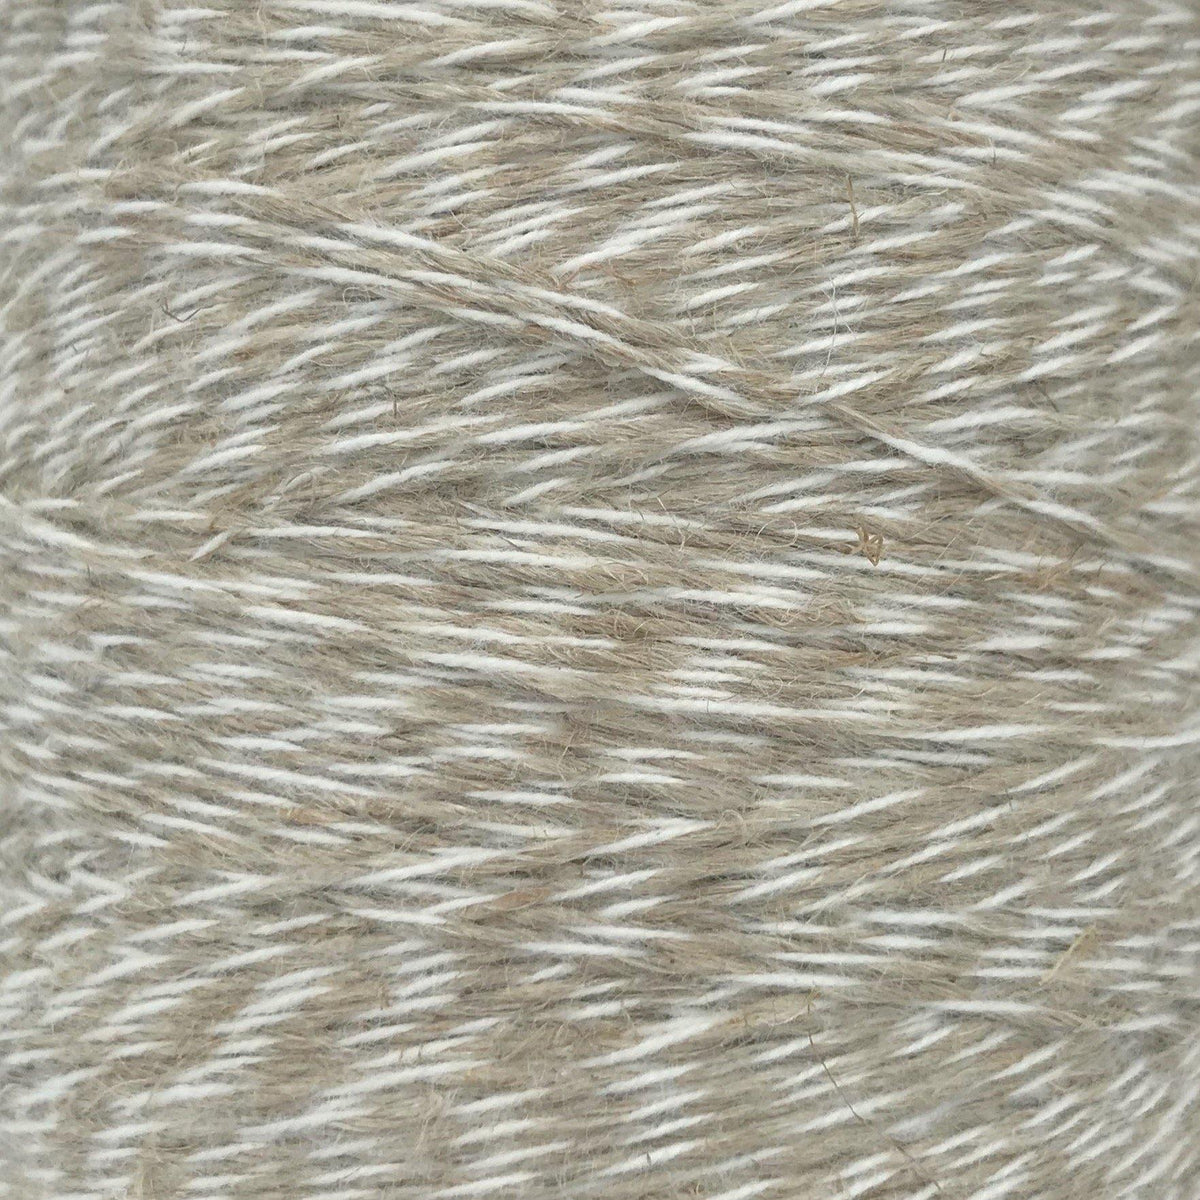 70% Linen, 30% Cotton 12/2 - theweavingroom